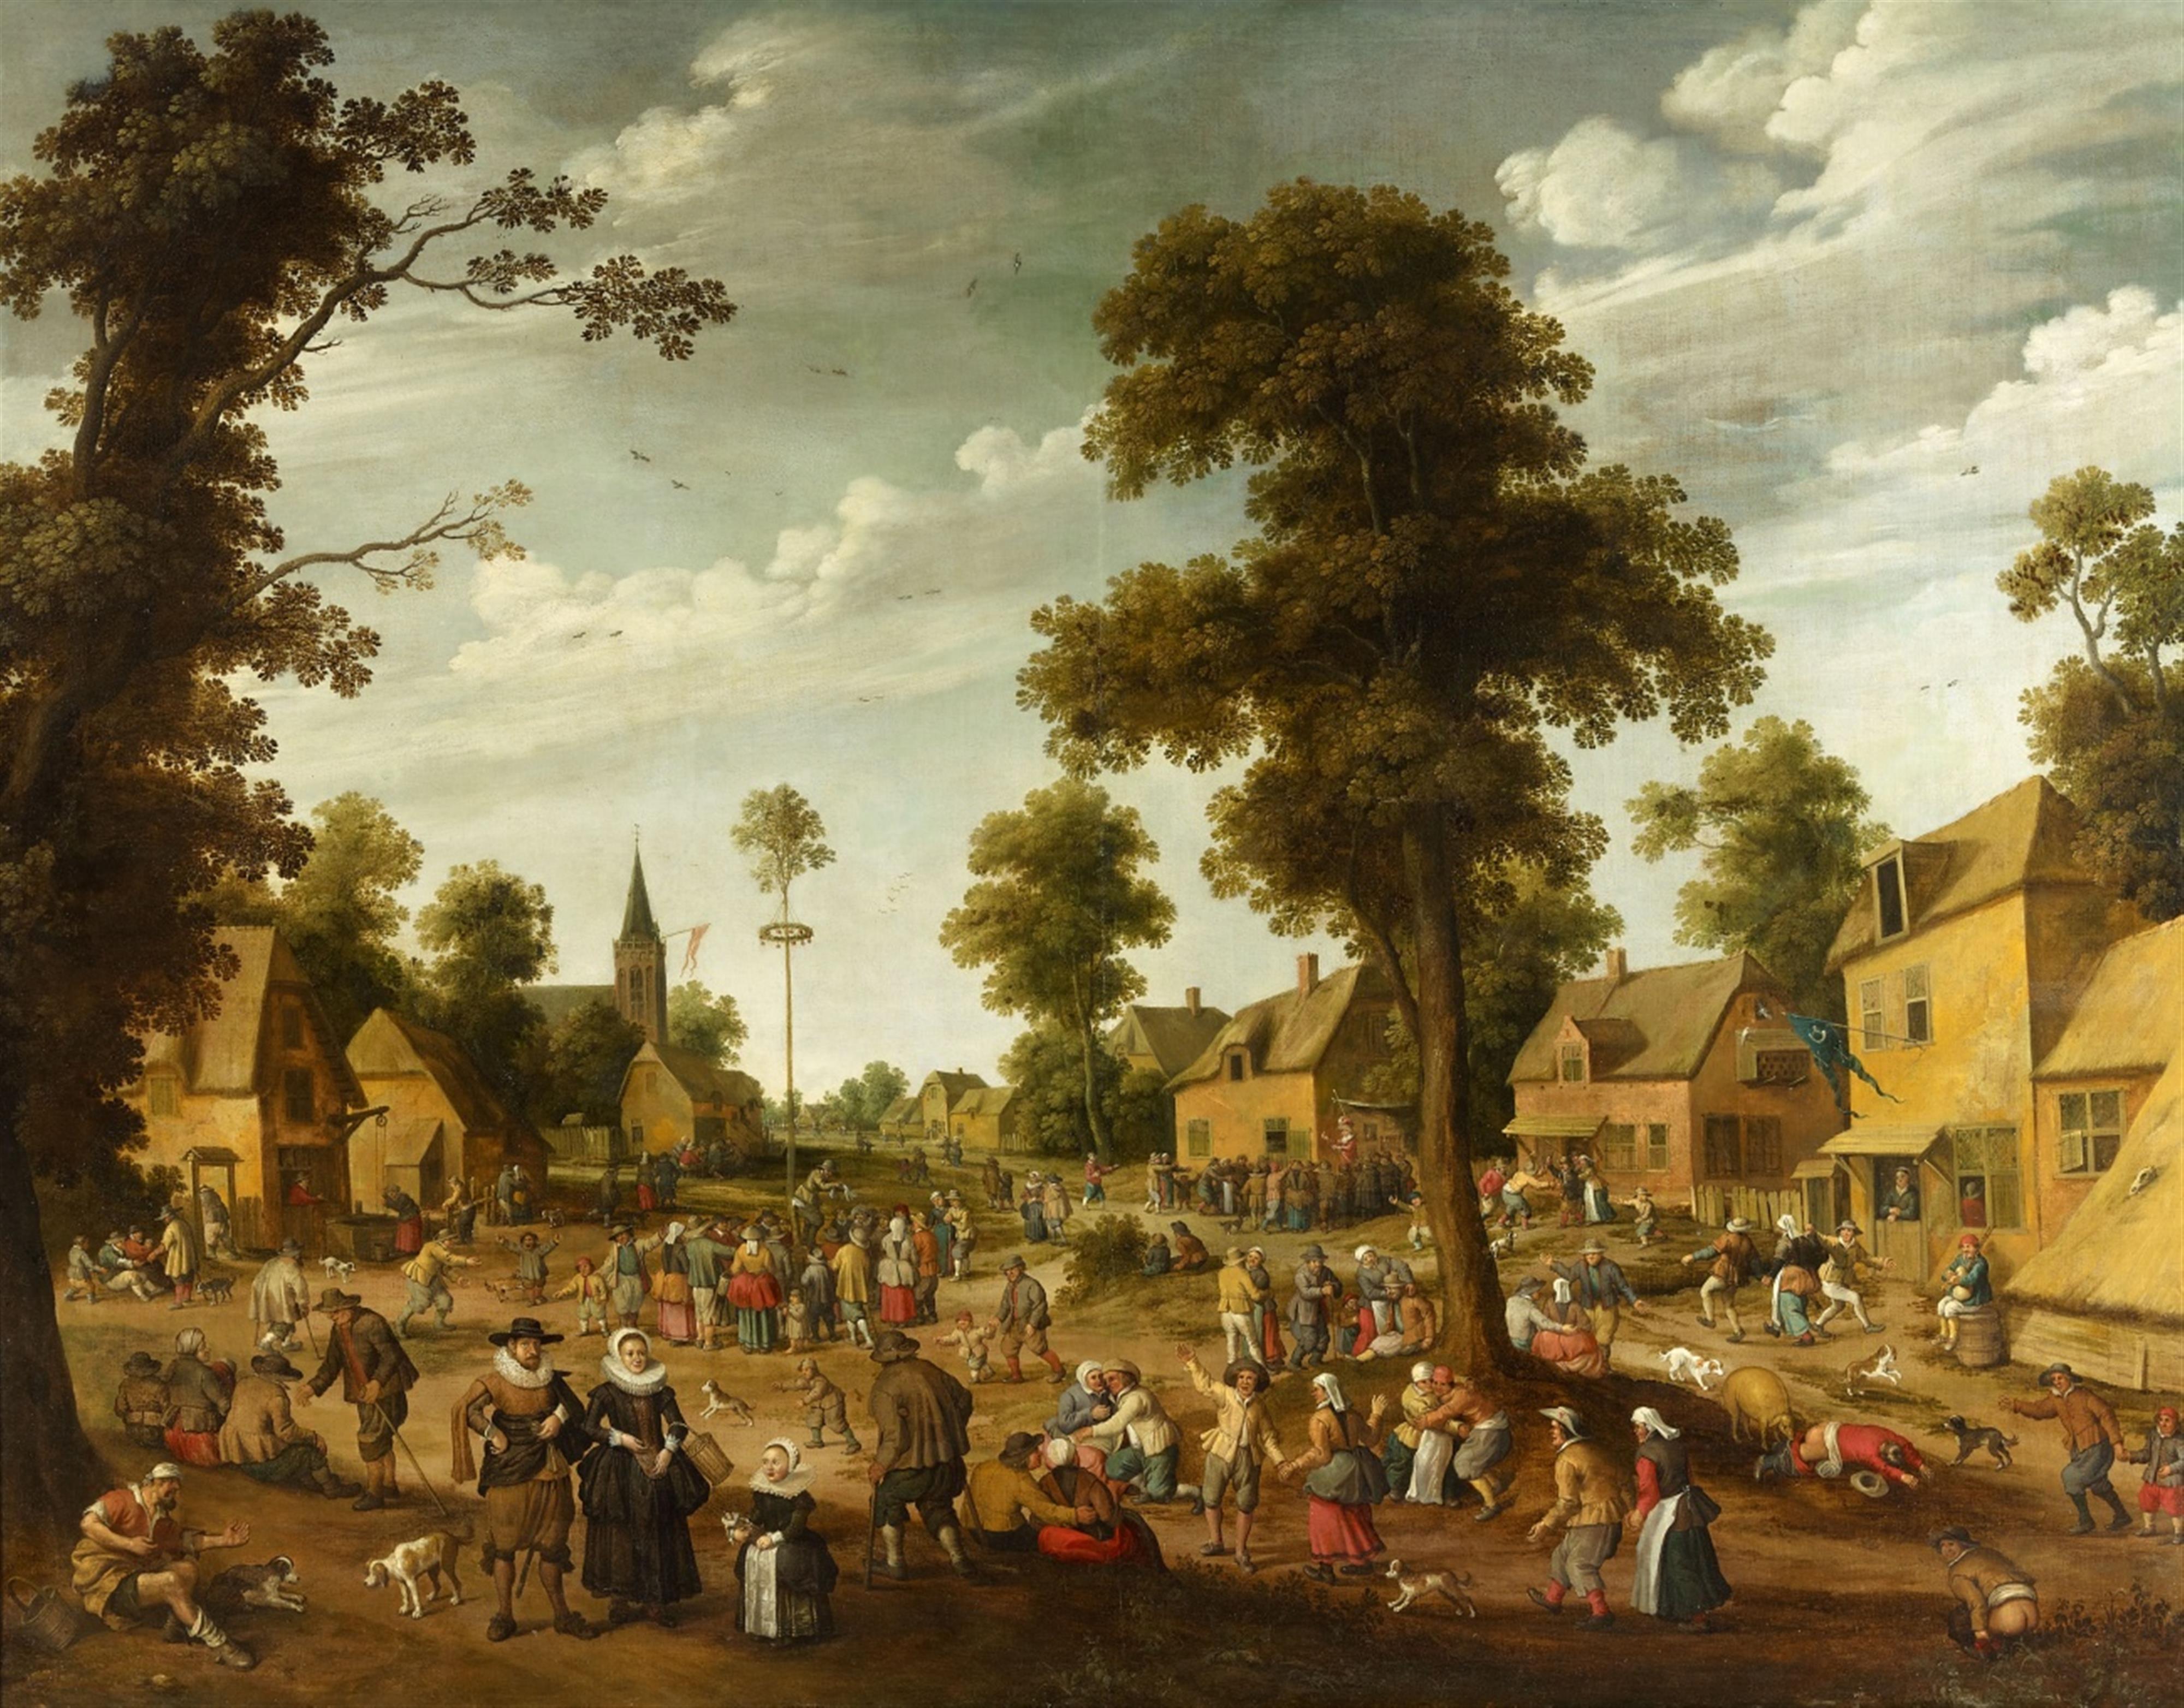 Joost Cornelisz. Droochsloot - Peasant Festival in a Village Square